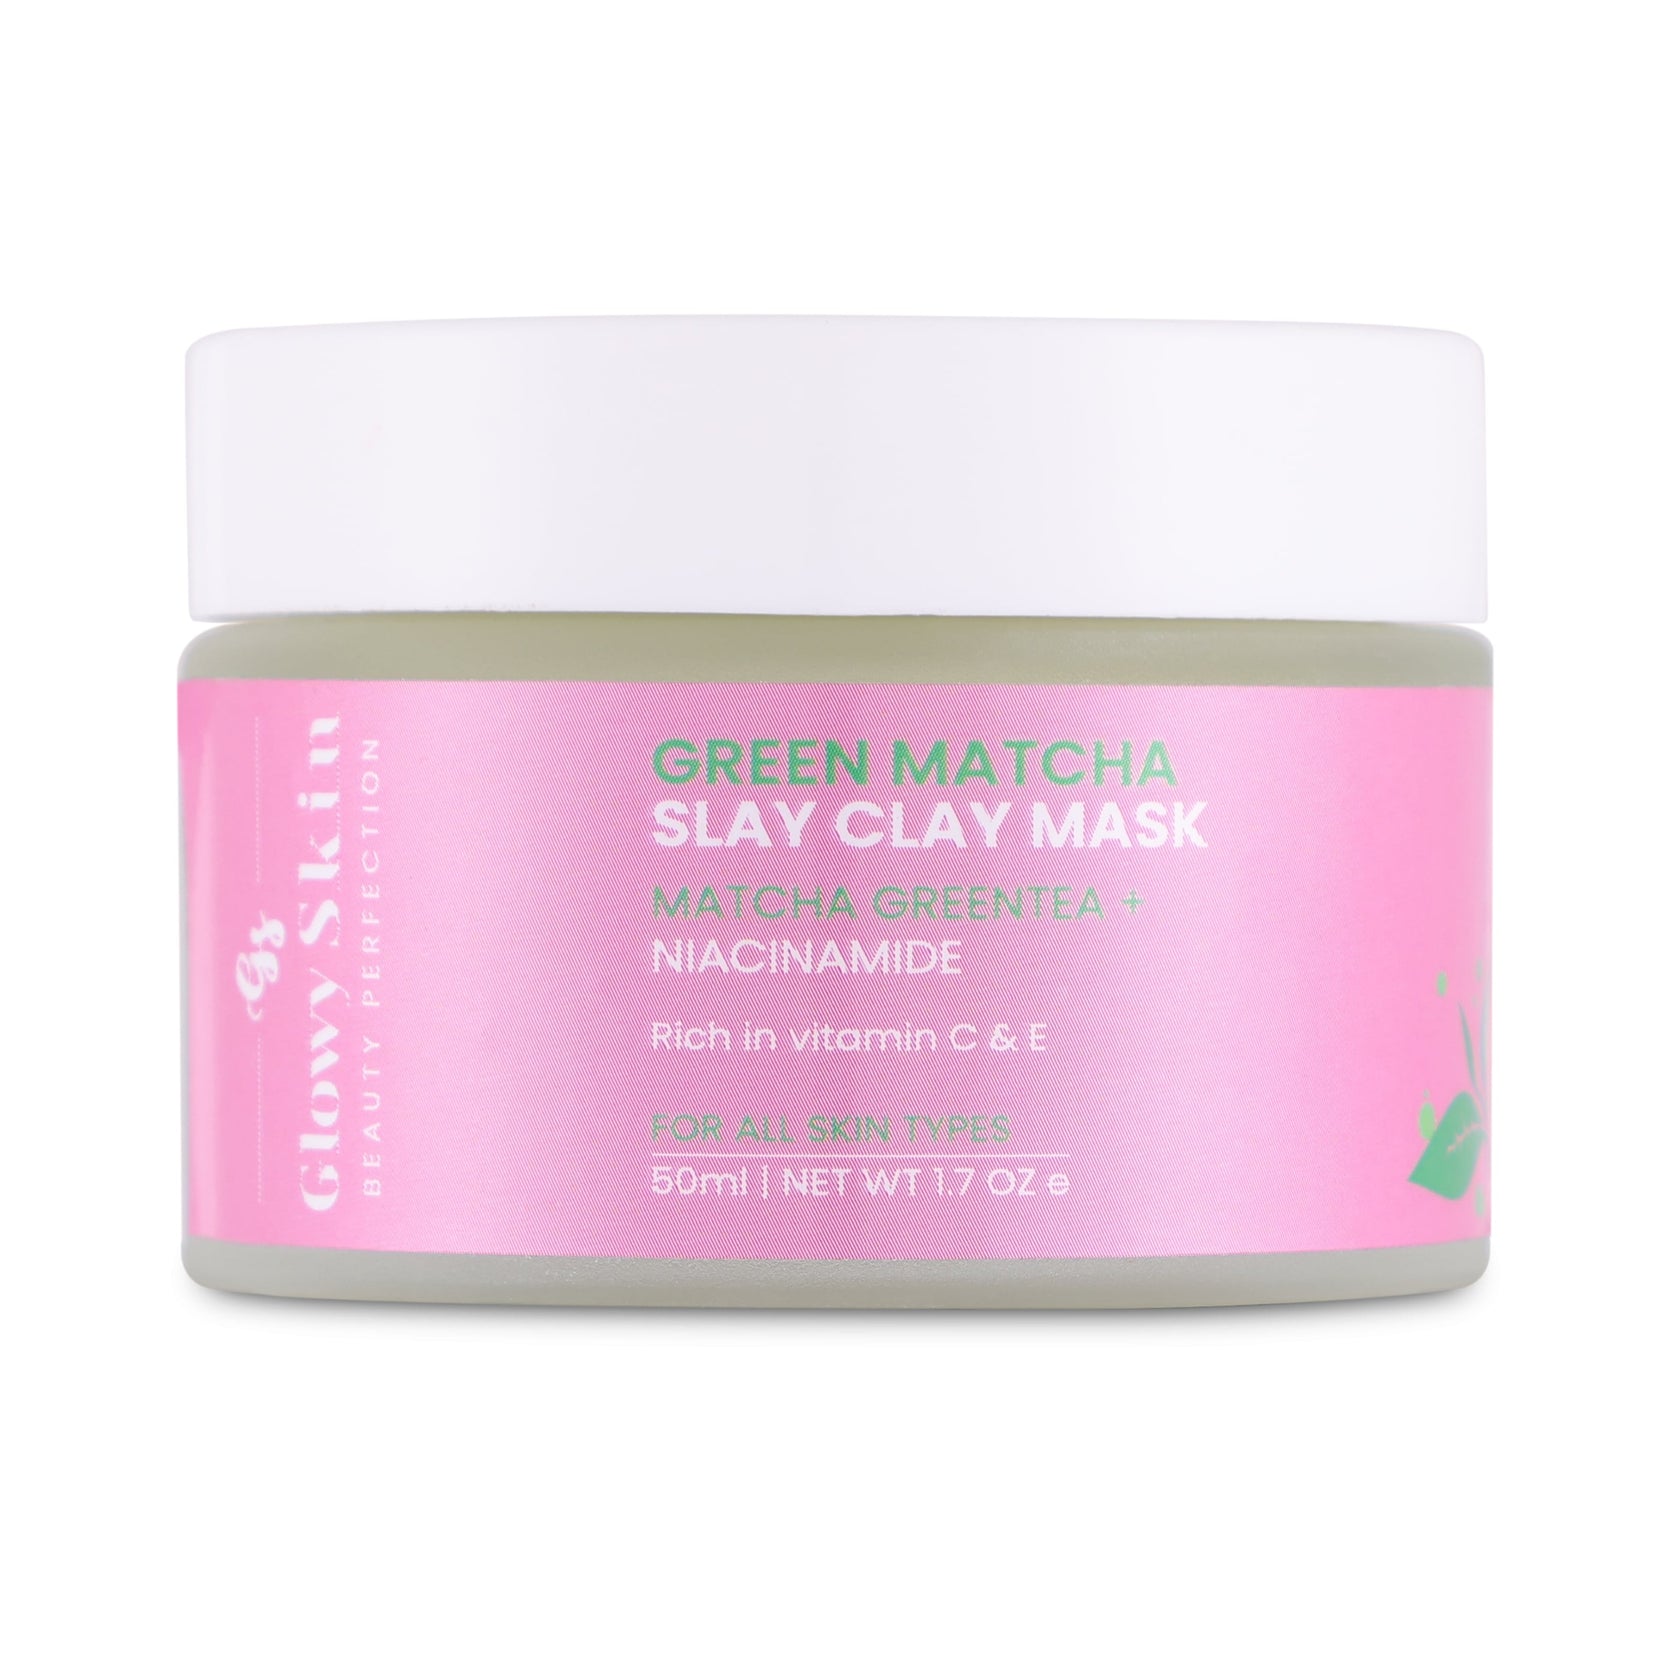 Shop Matcha Green Tea Clay Face Mask For Acne â€“ Glowy SkinHealth and BeautyCosmeticsWest DelhiJanak Puri